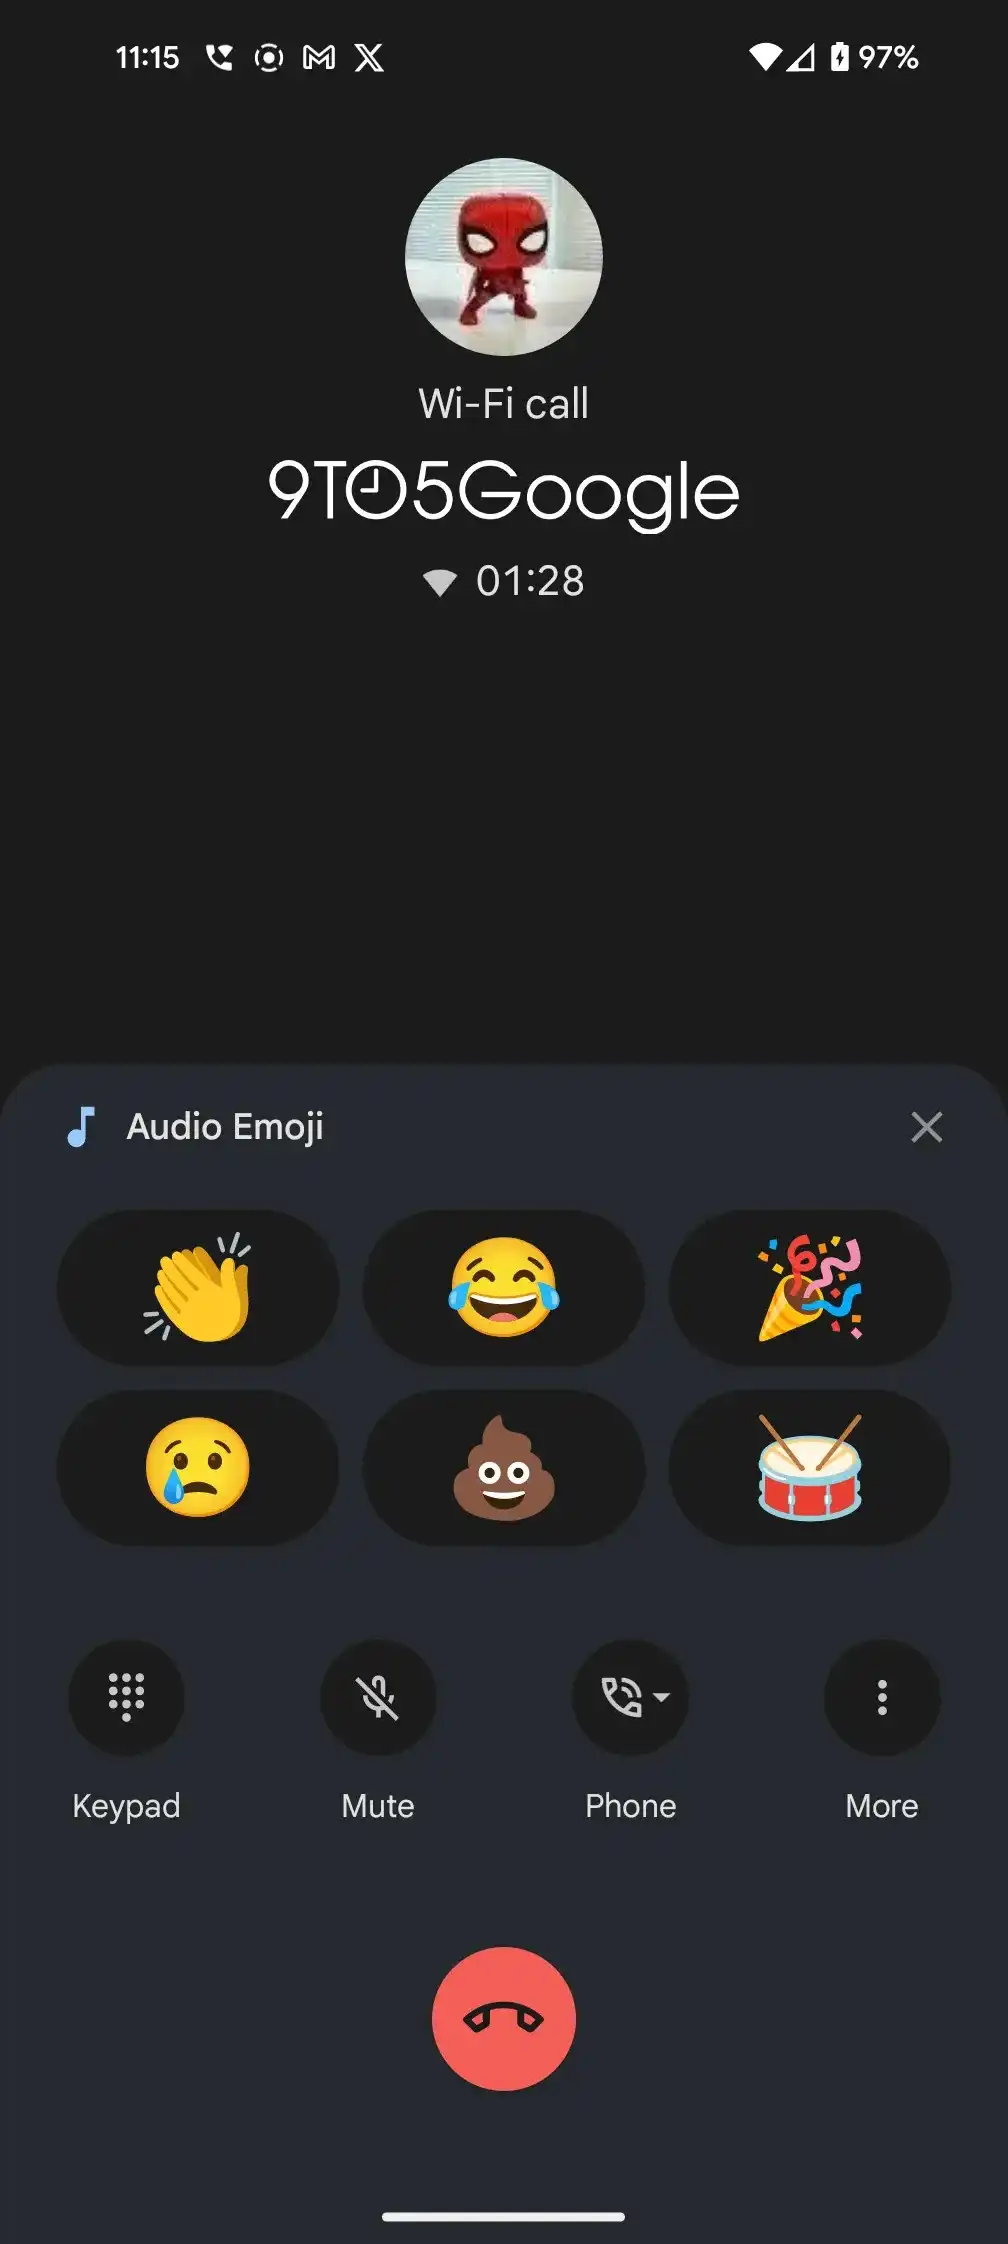 قابلیت جذاب ایموجی صوتی به Google Phone اضافه شد